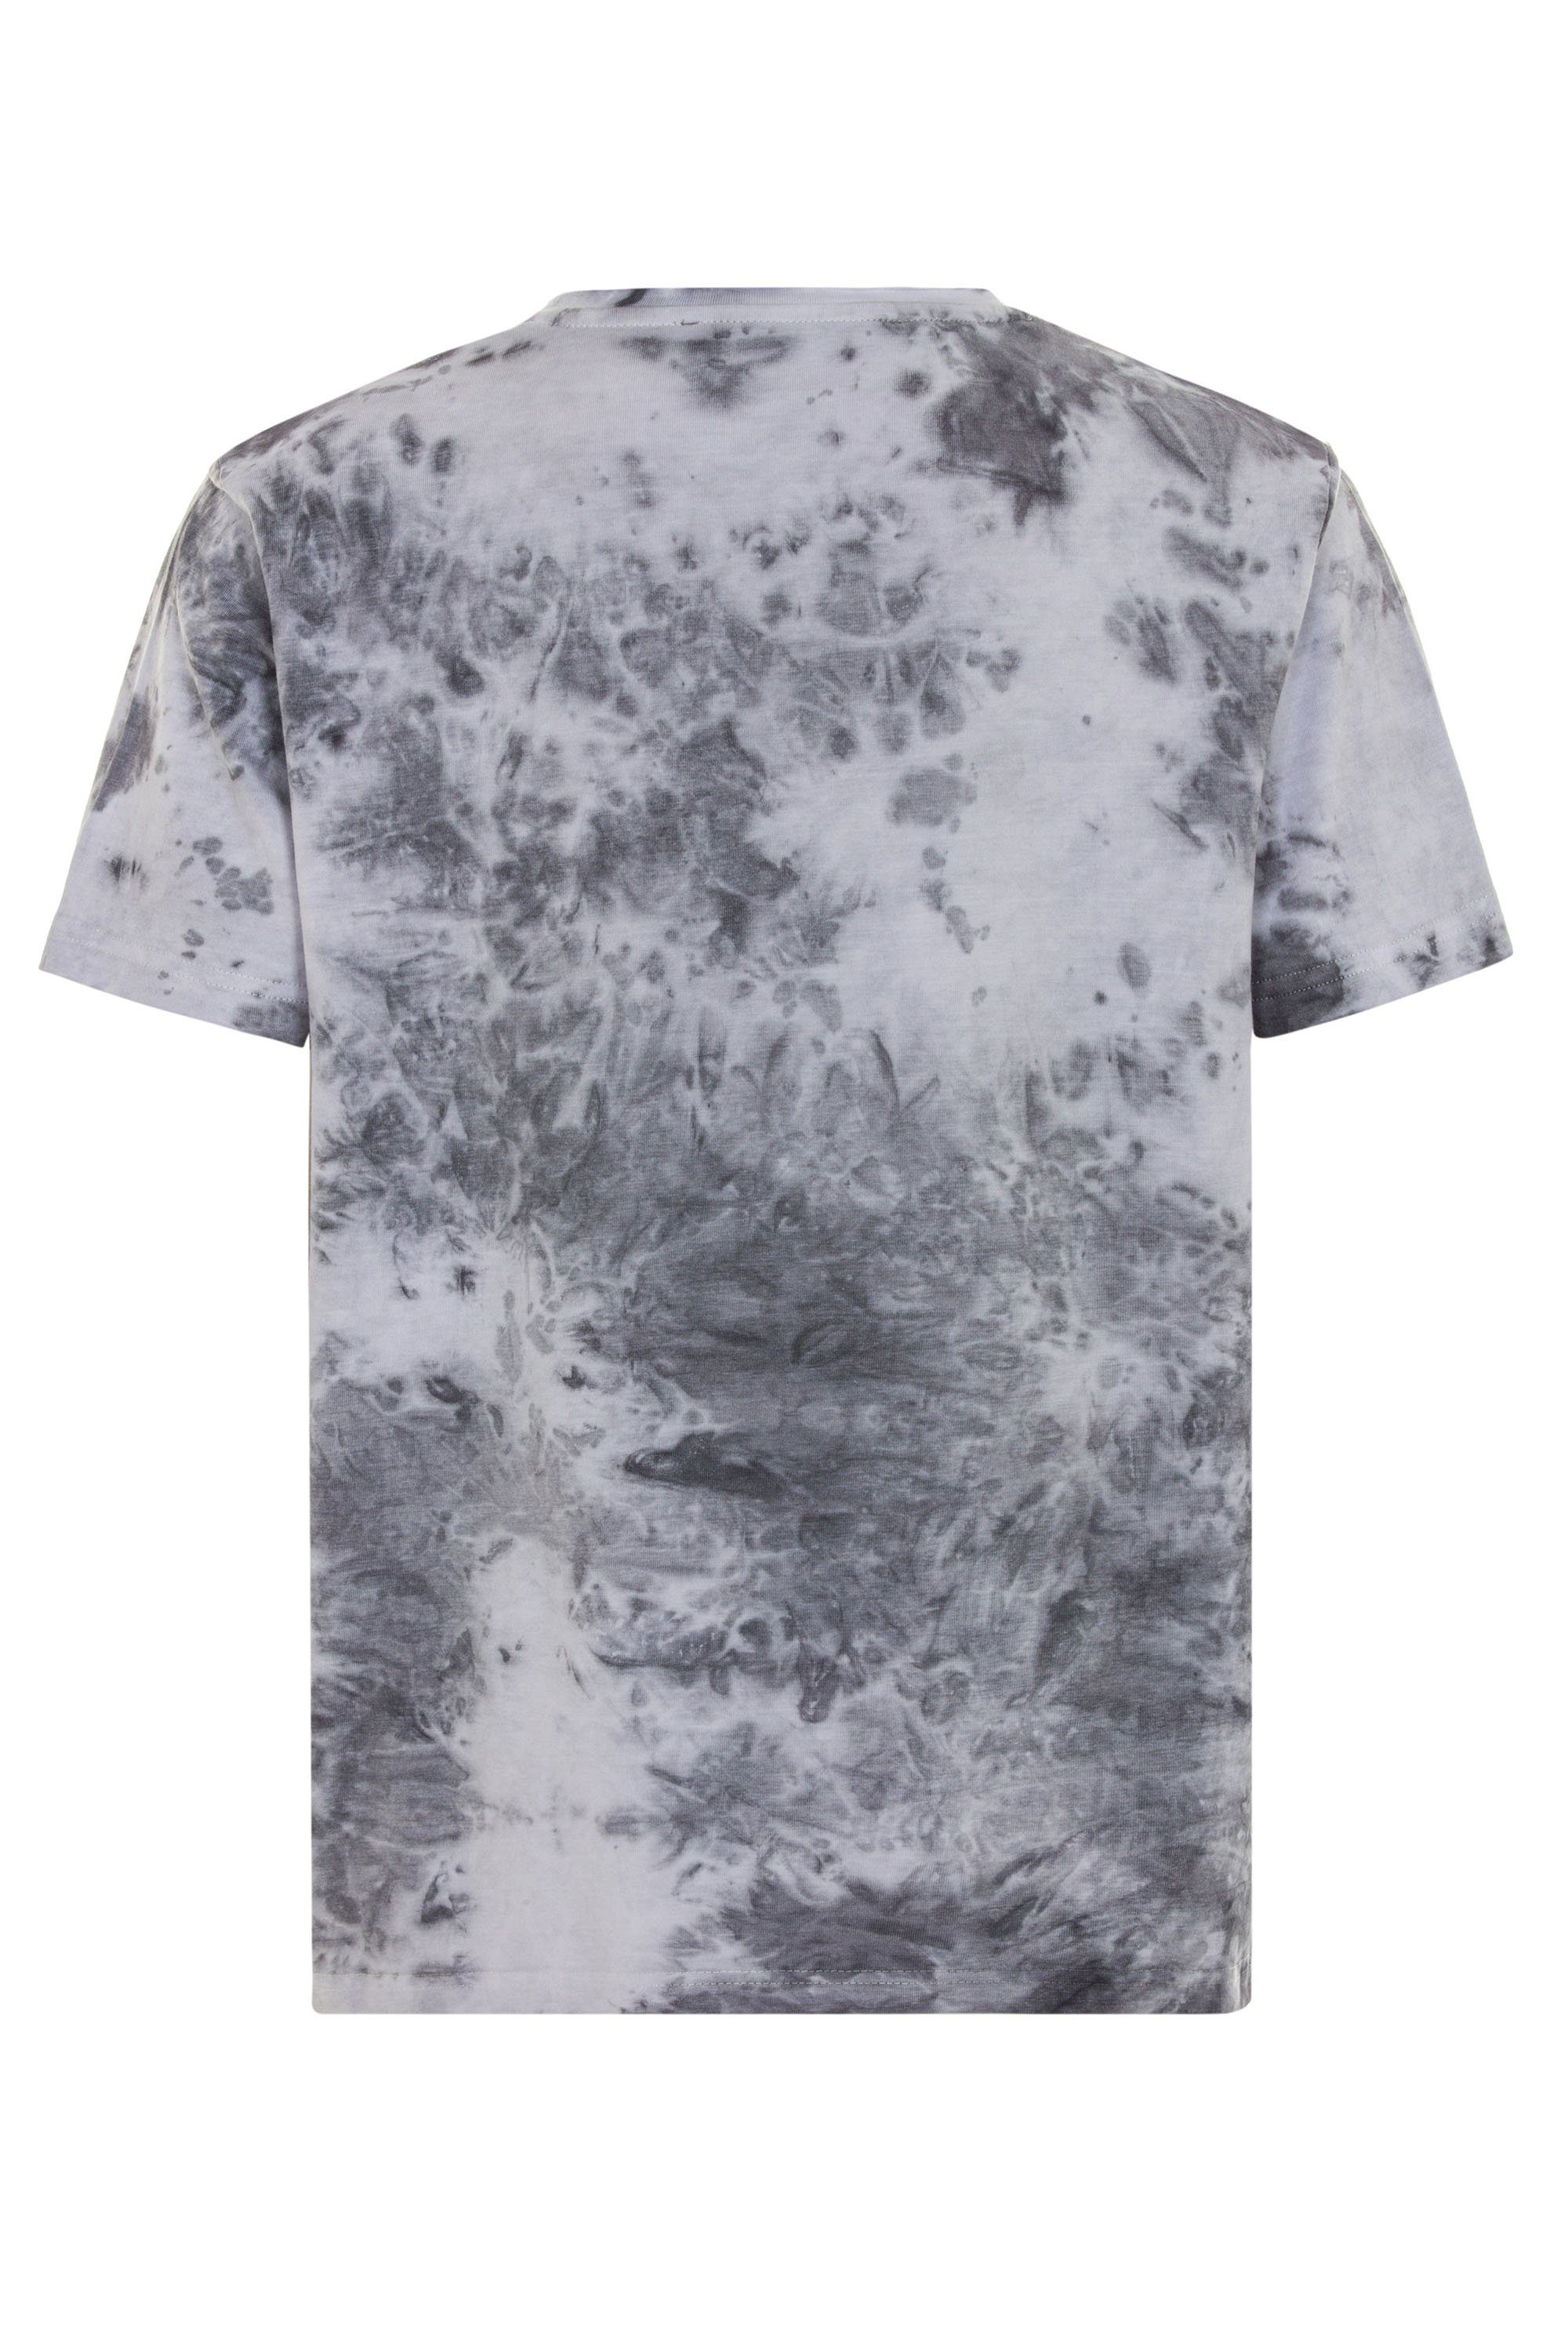 Cipo & Baxx T-Shirt mit anthrazit großflächigem Markenprint